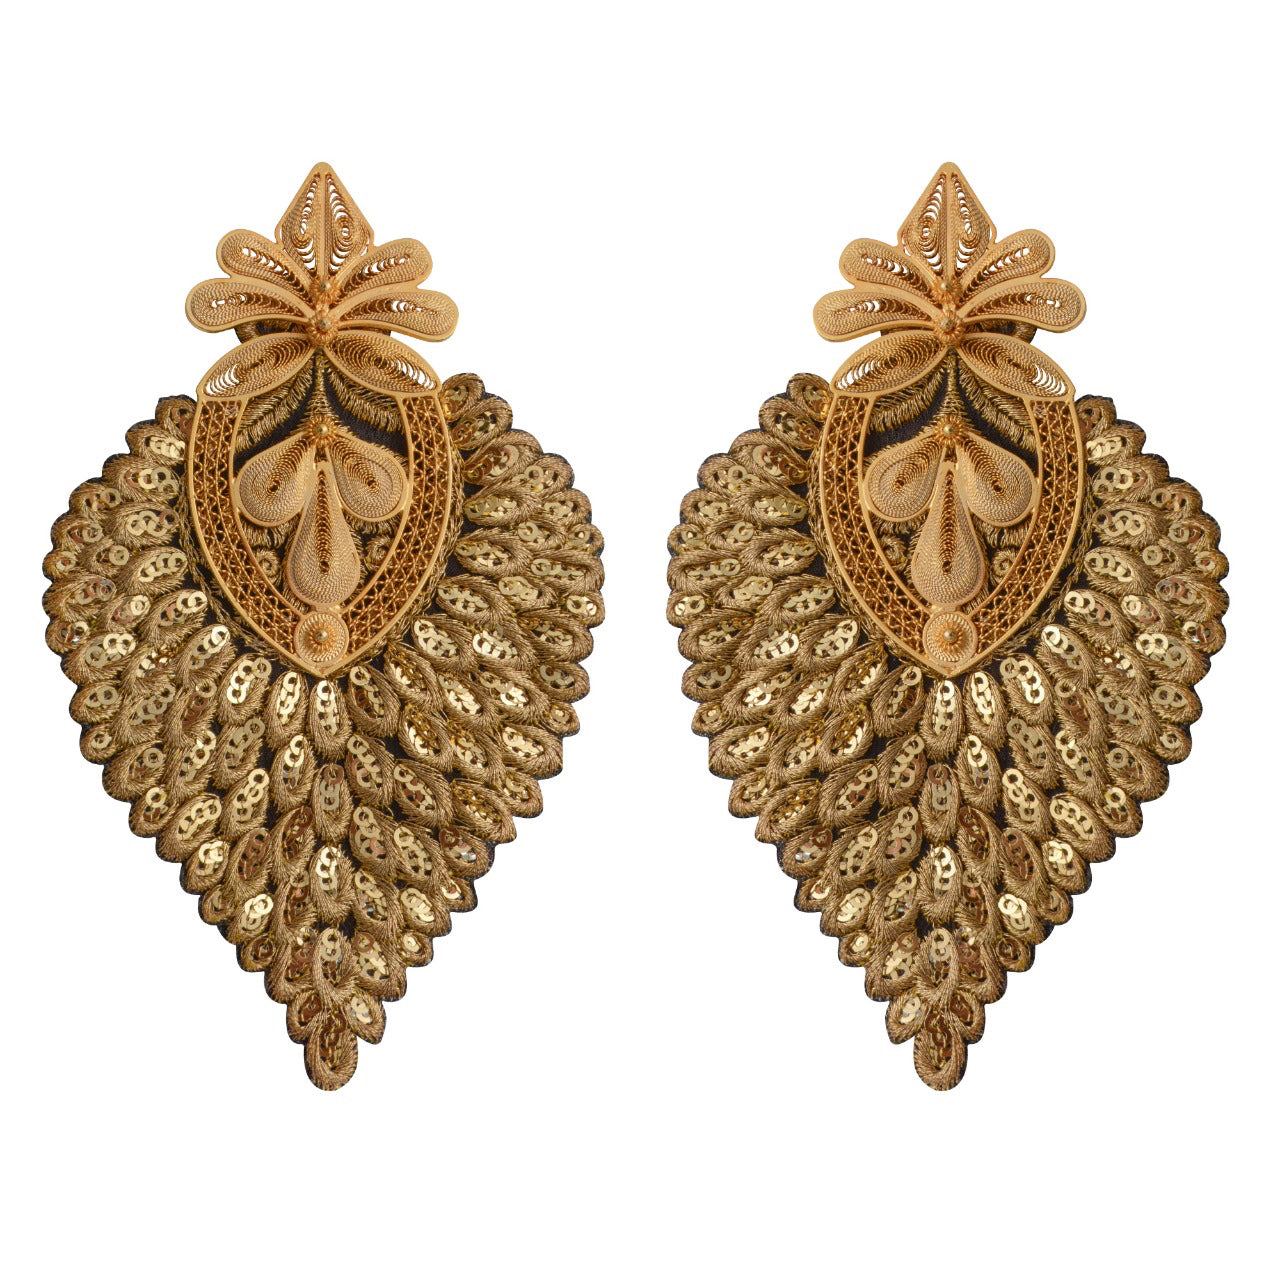 'Cairo' Earrings